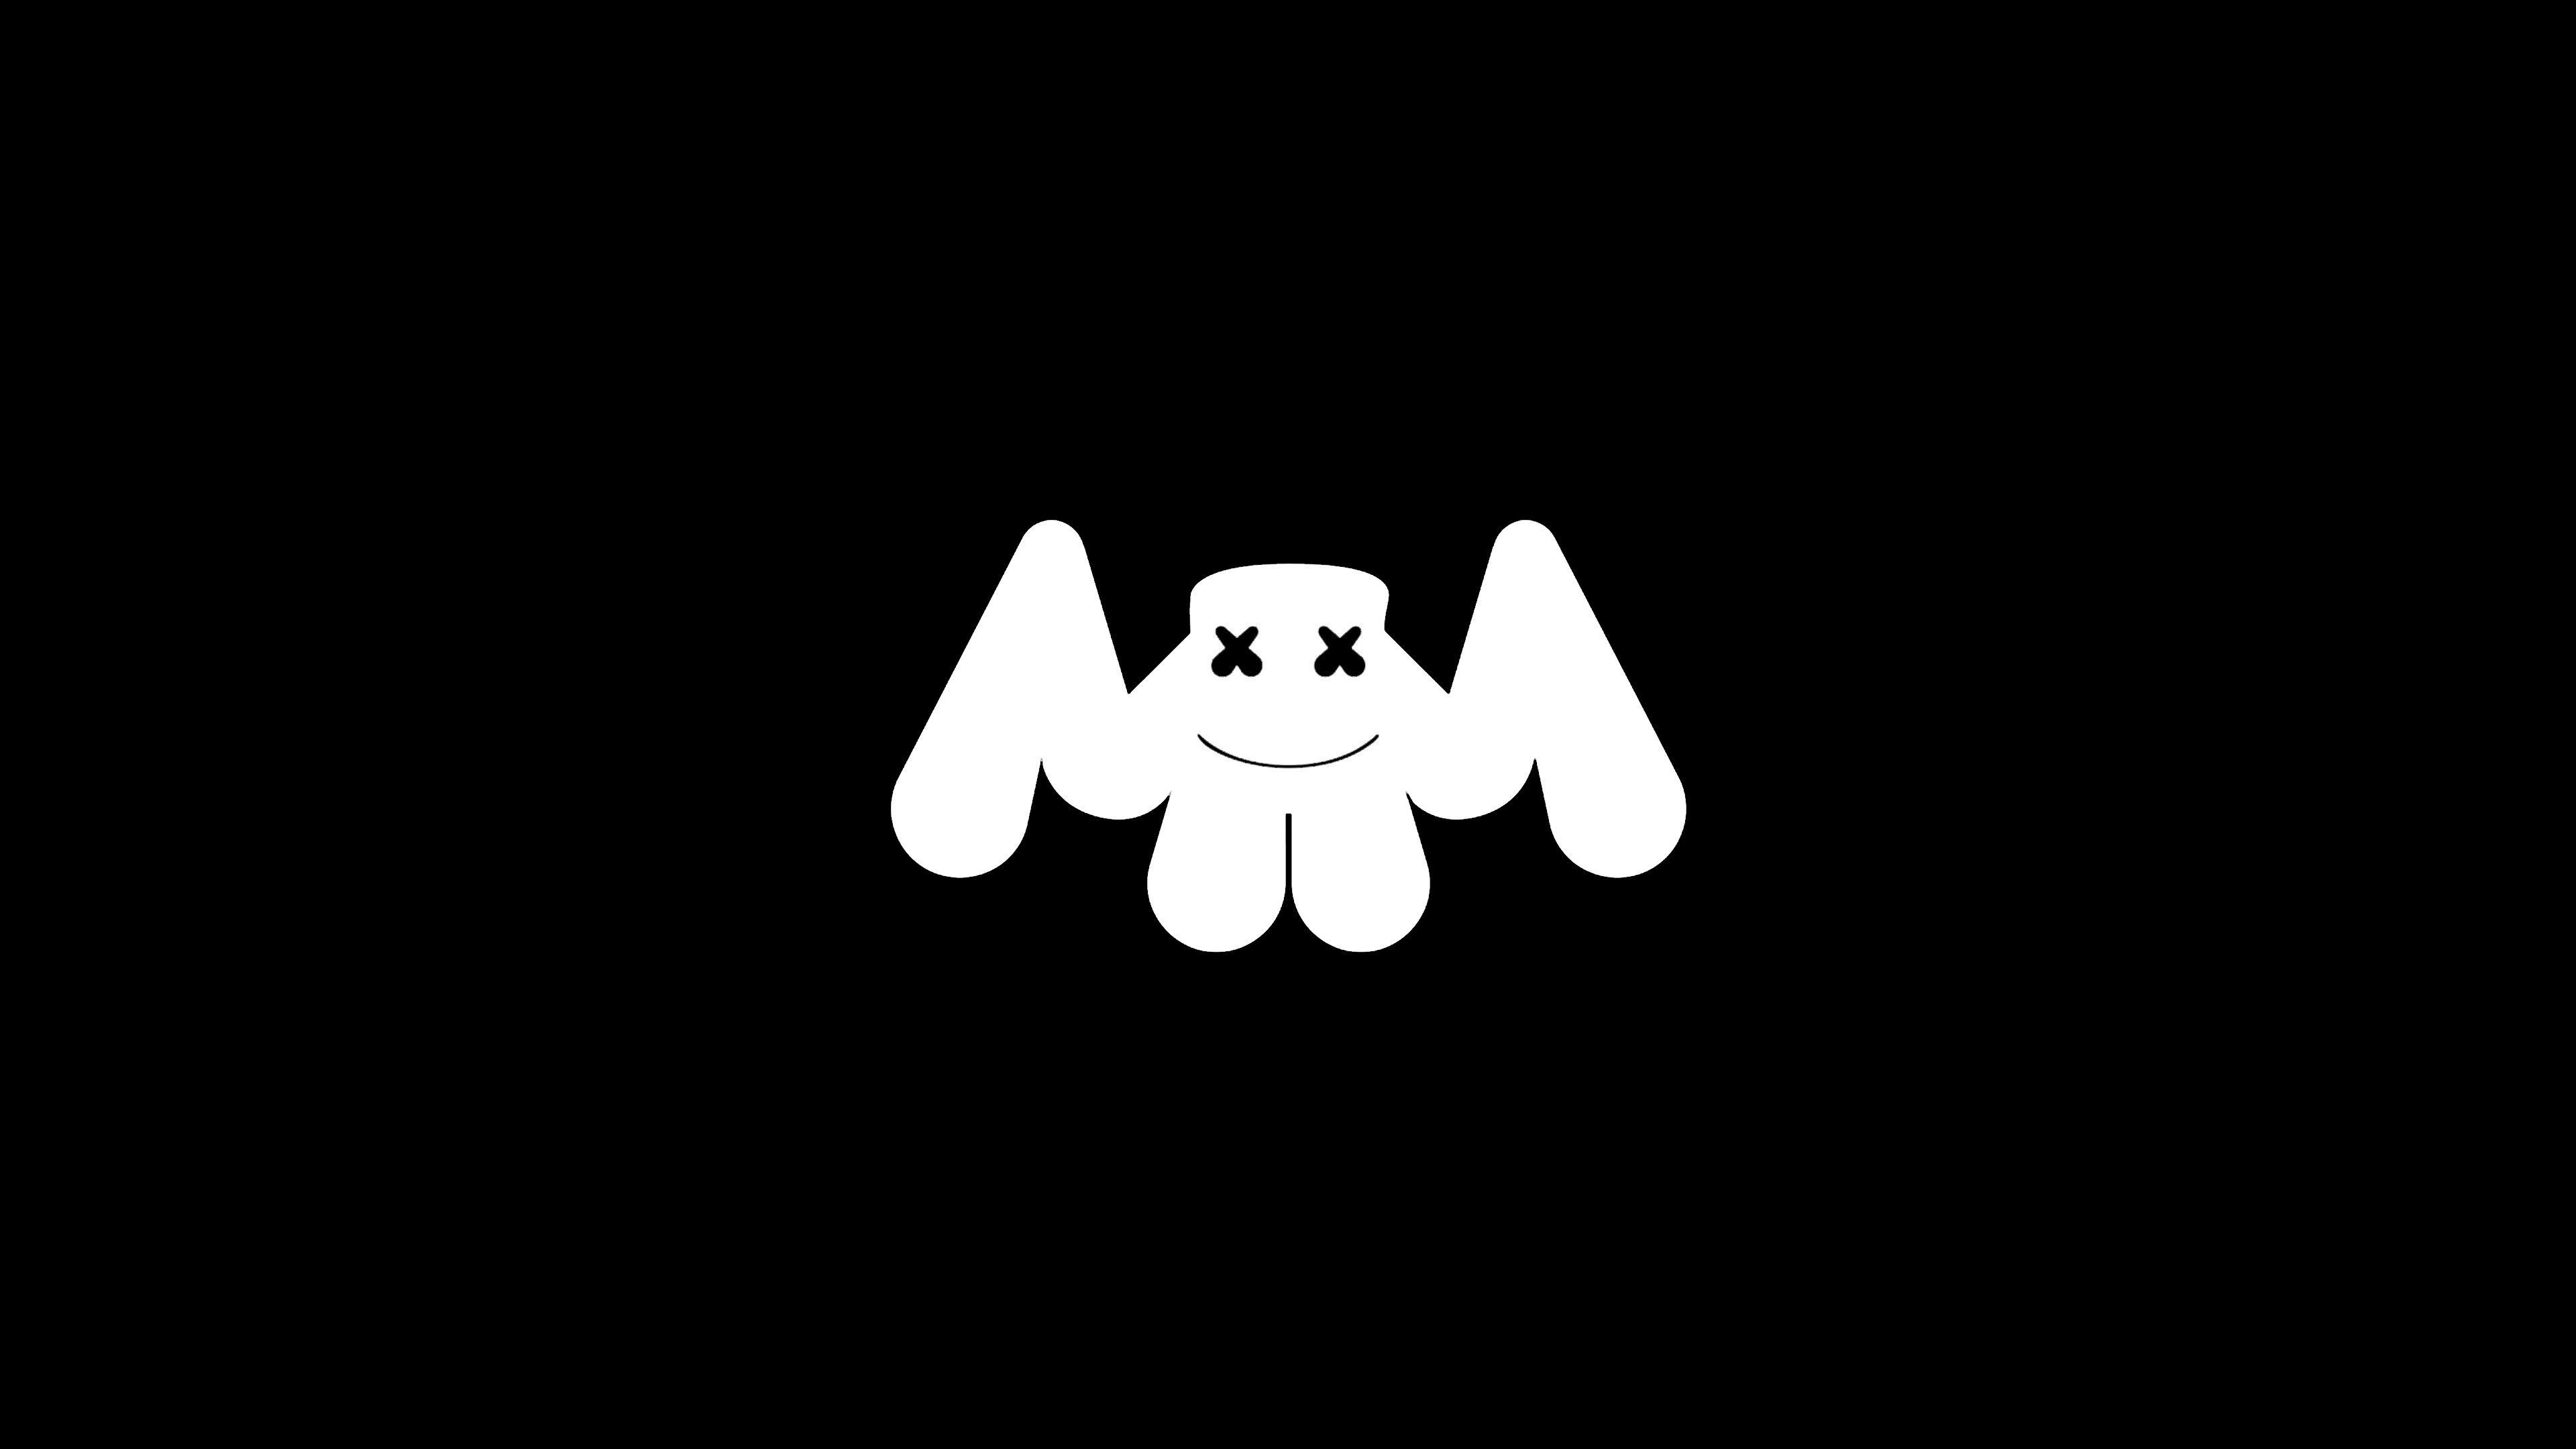 Marshmello Logo Dark, HD Music, 4k Wallpaper, Image, Background, Photo and Picture